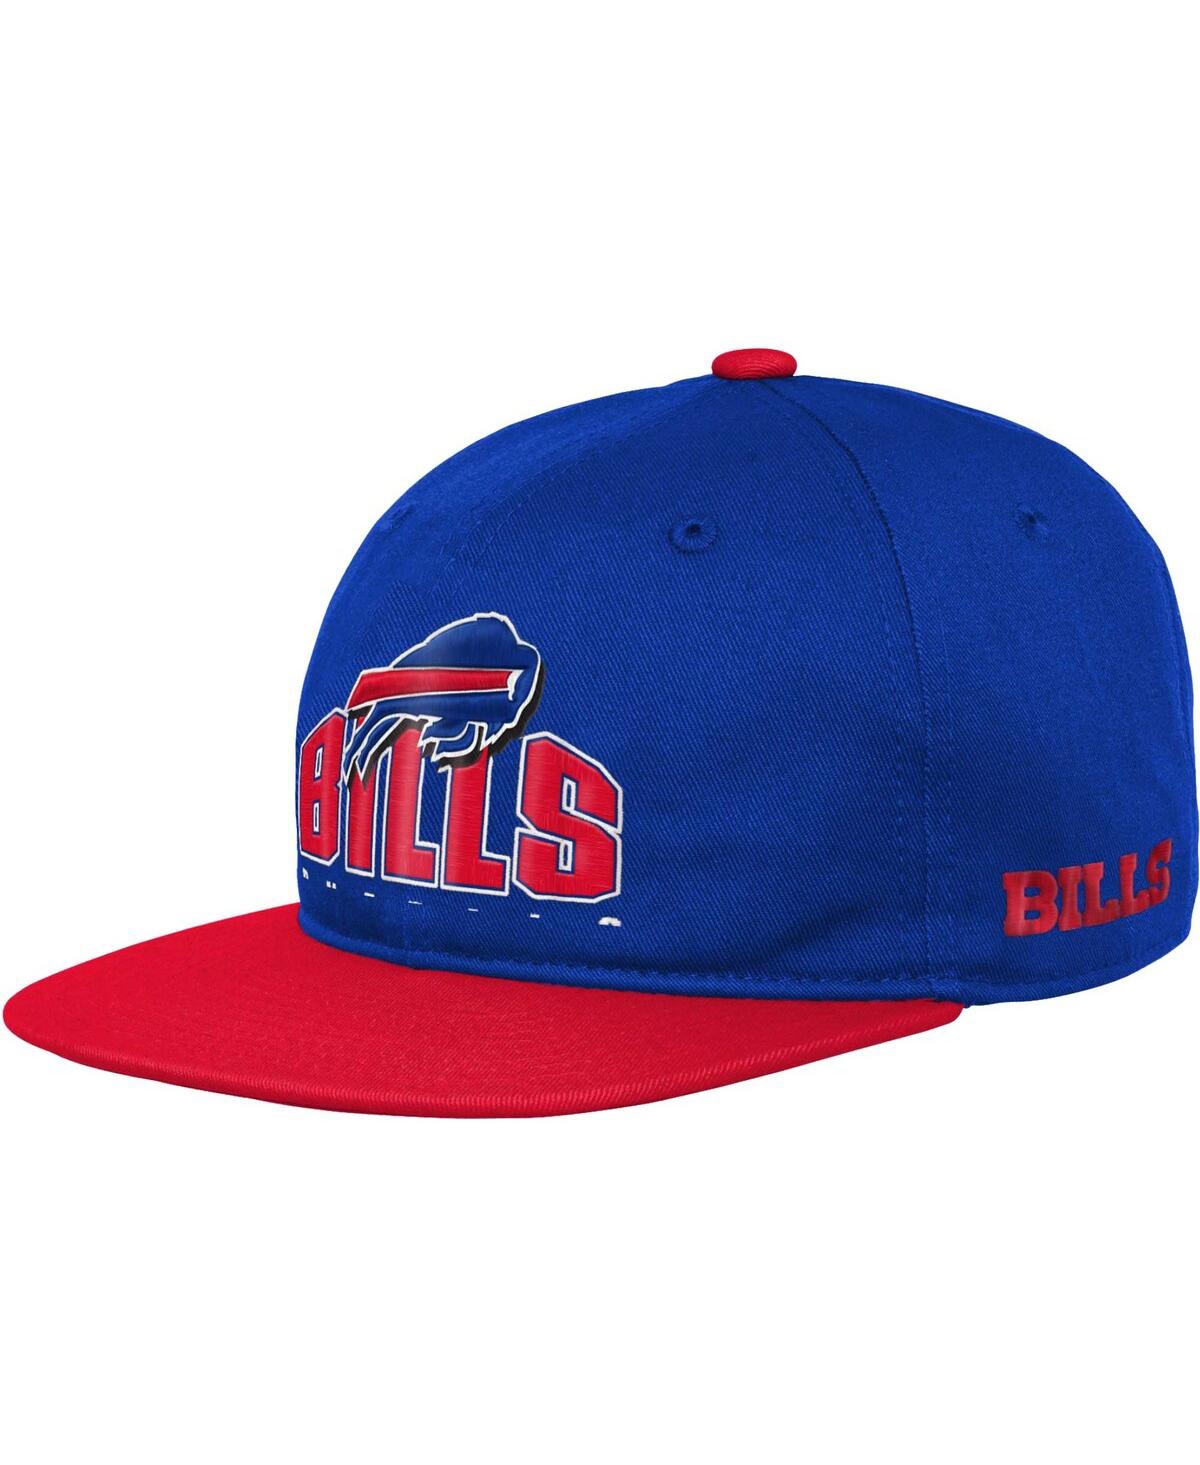 Outerstuff Kids' Big Boys And Girls Royal Buffalo Bills Legacy Deadstock Snapback Hat